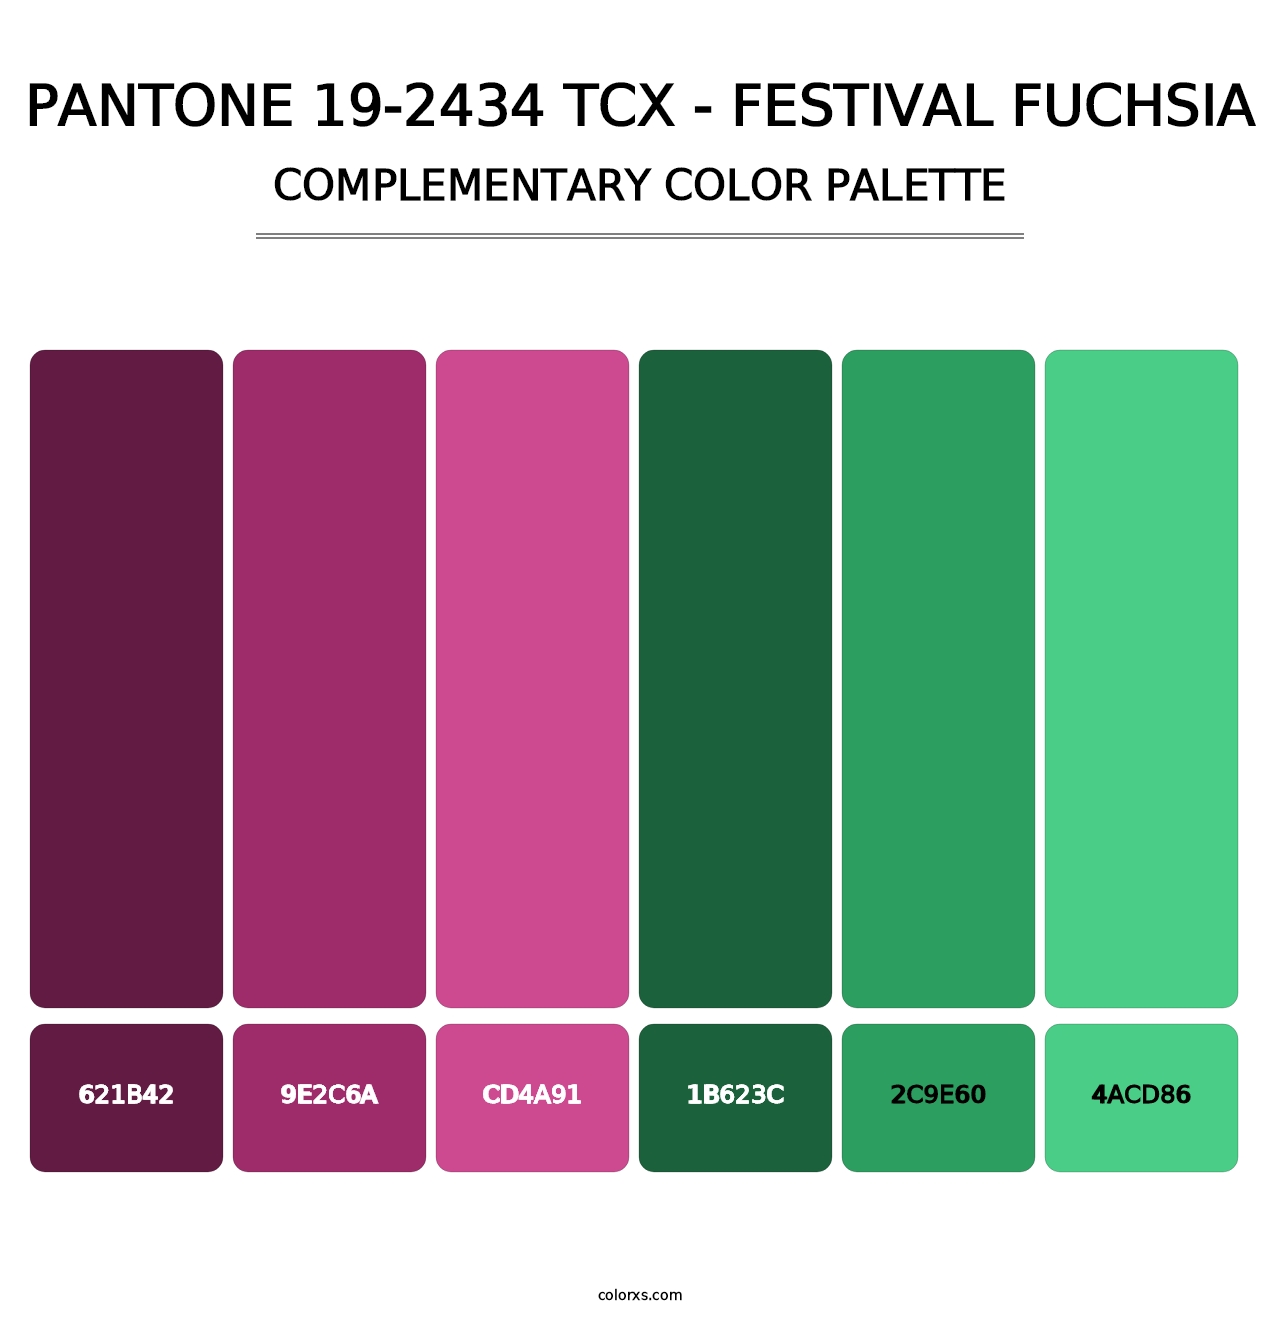 PANTONE 19-2434 TCX - Festival Fuchsia - Complementary Color Palette